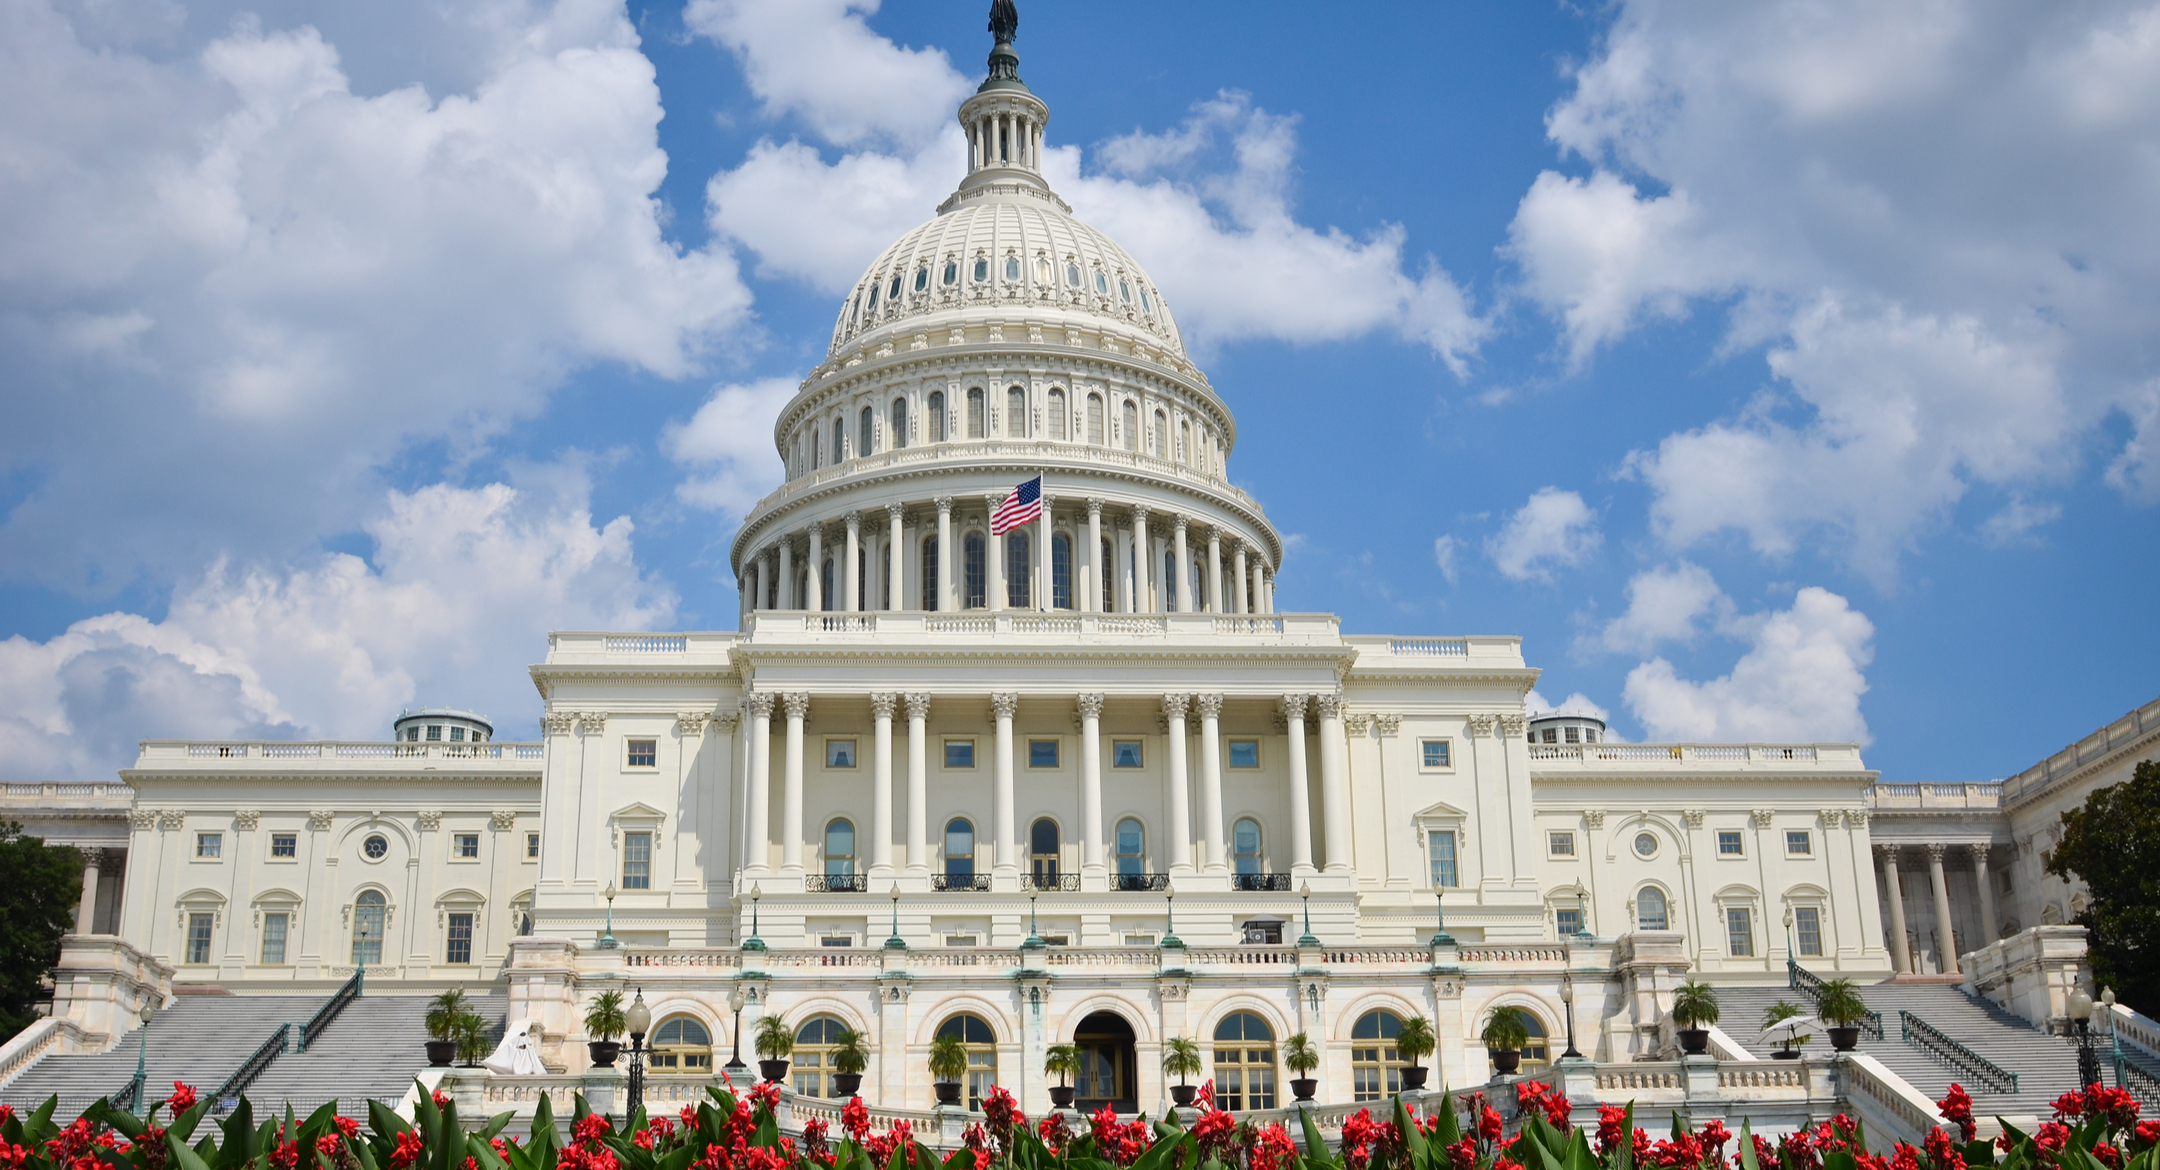  The US Capitol building in Washington, D.C. Credit: Orhan Cam/Shutterstock.com